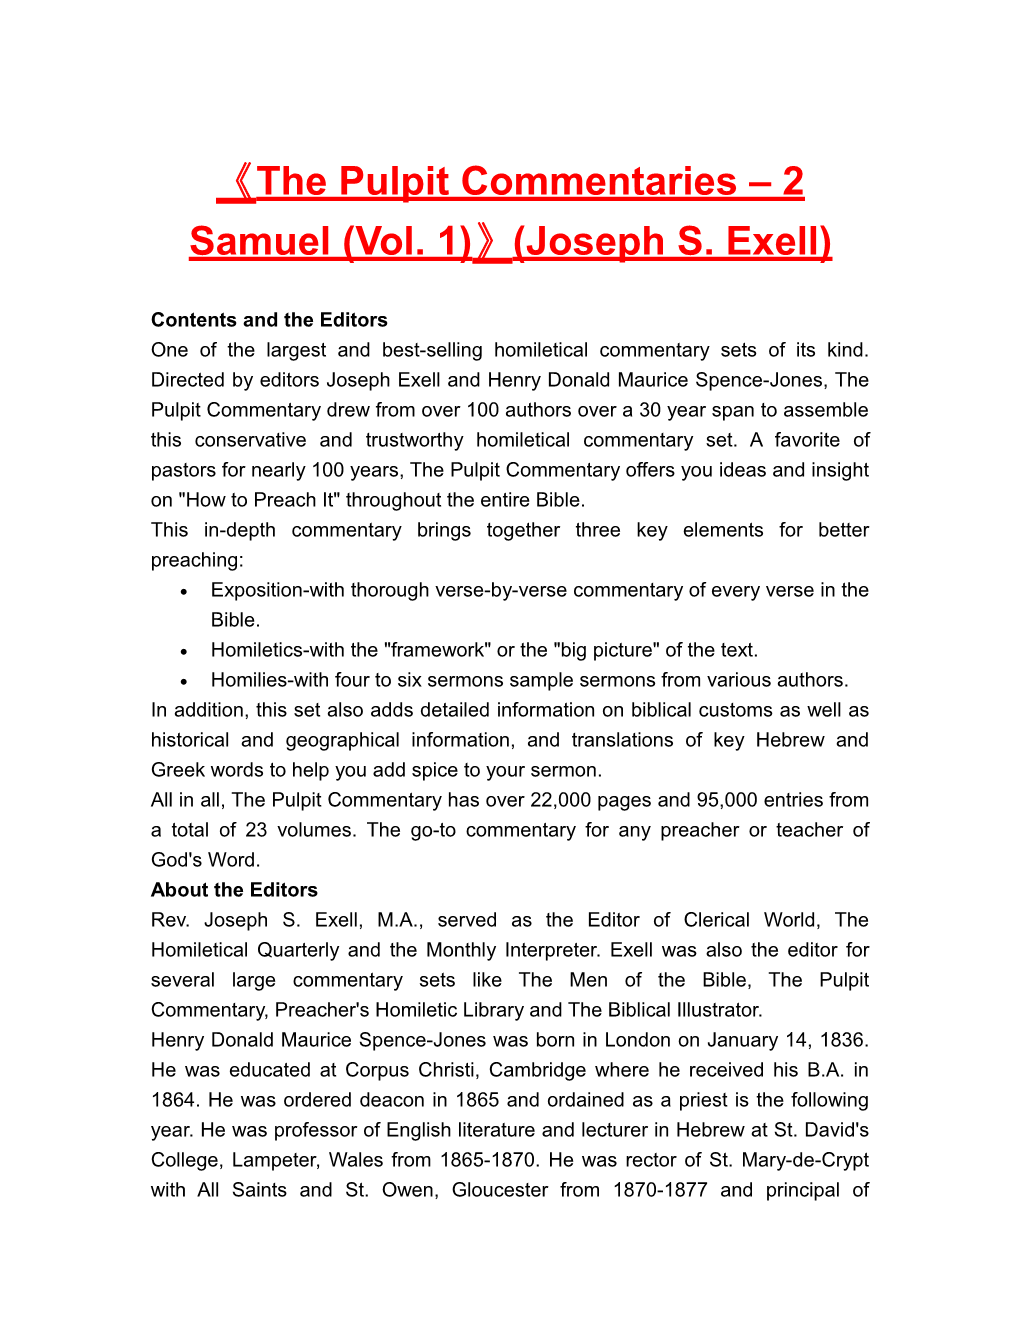 The Pulpit Commentaries 2 Samuel (Vol. 1) (Joseph S. Exell)